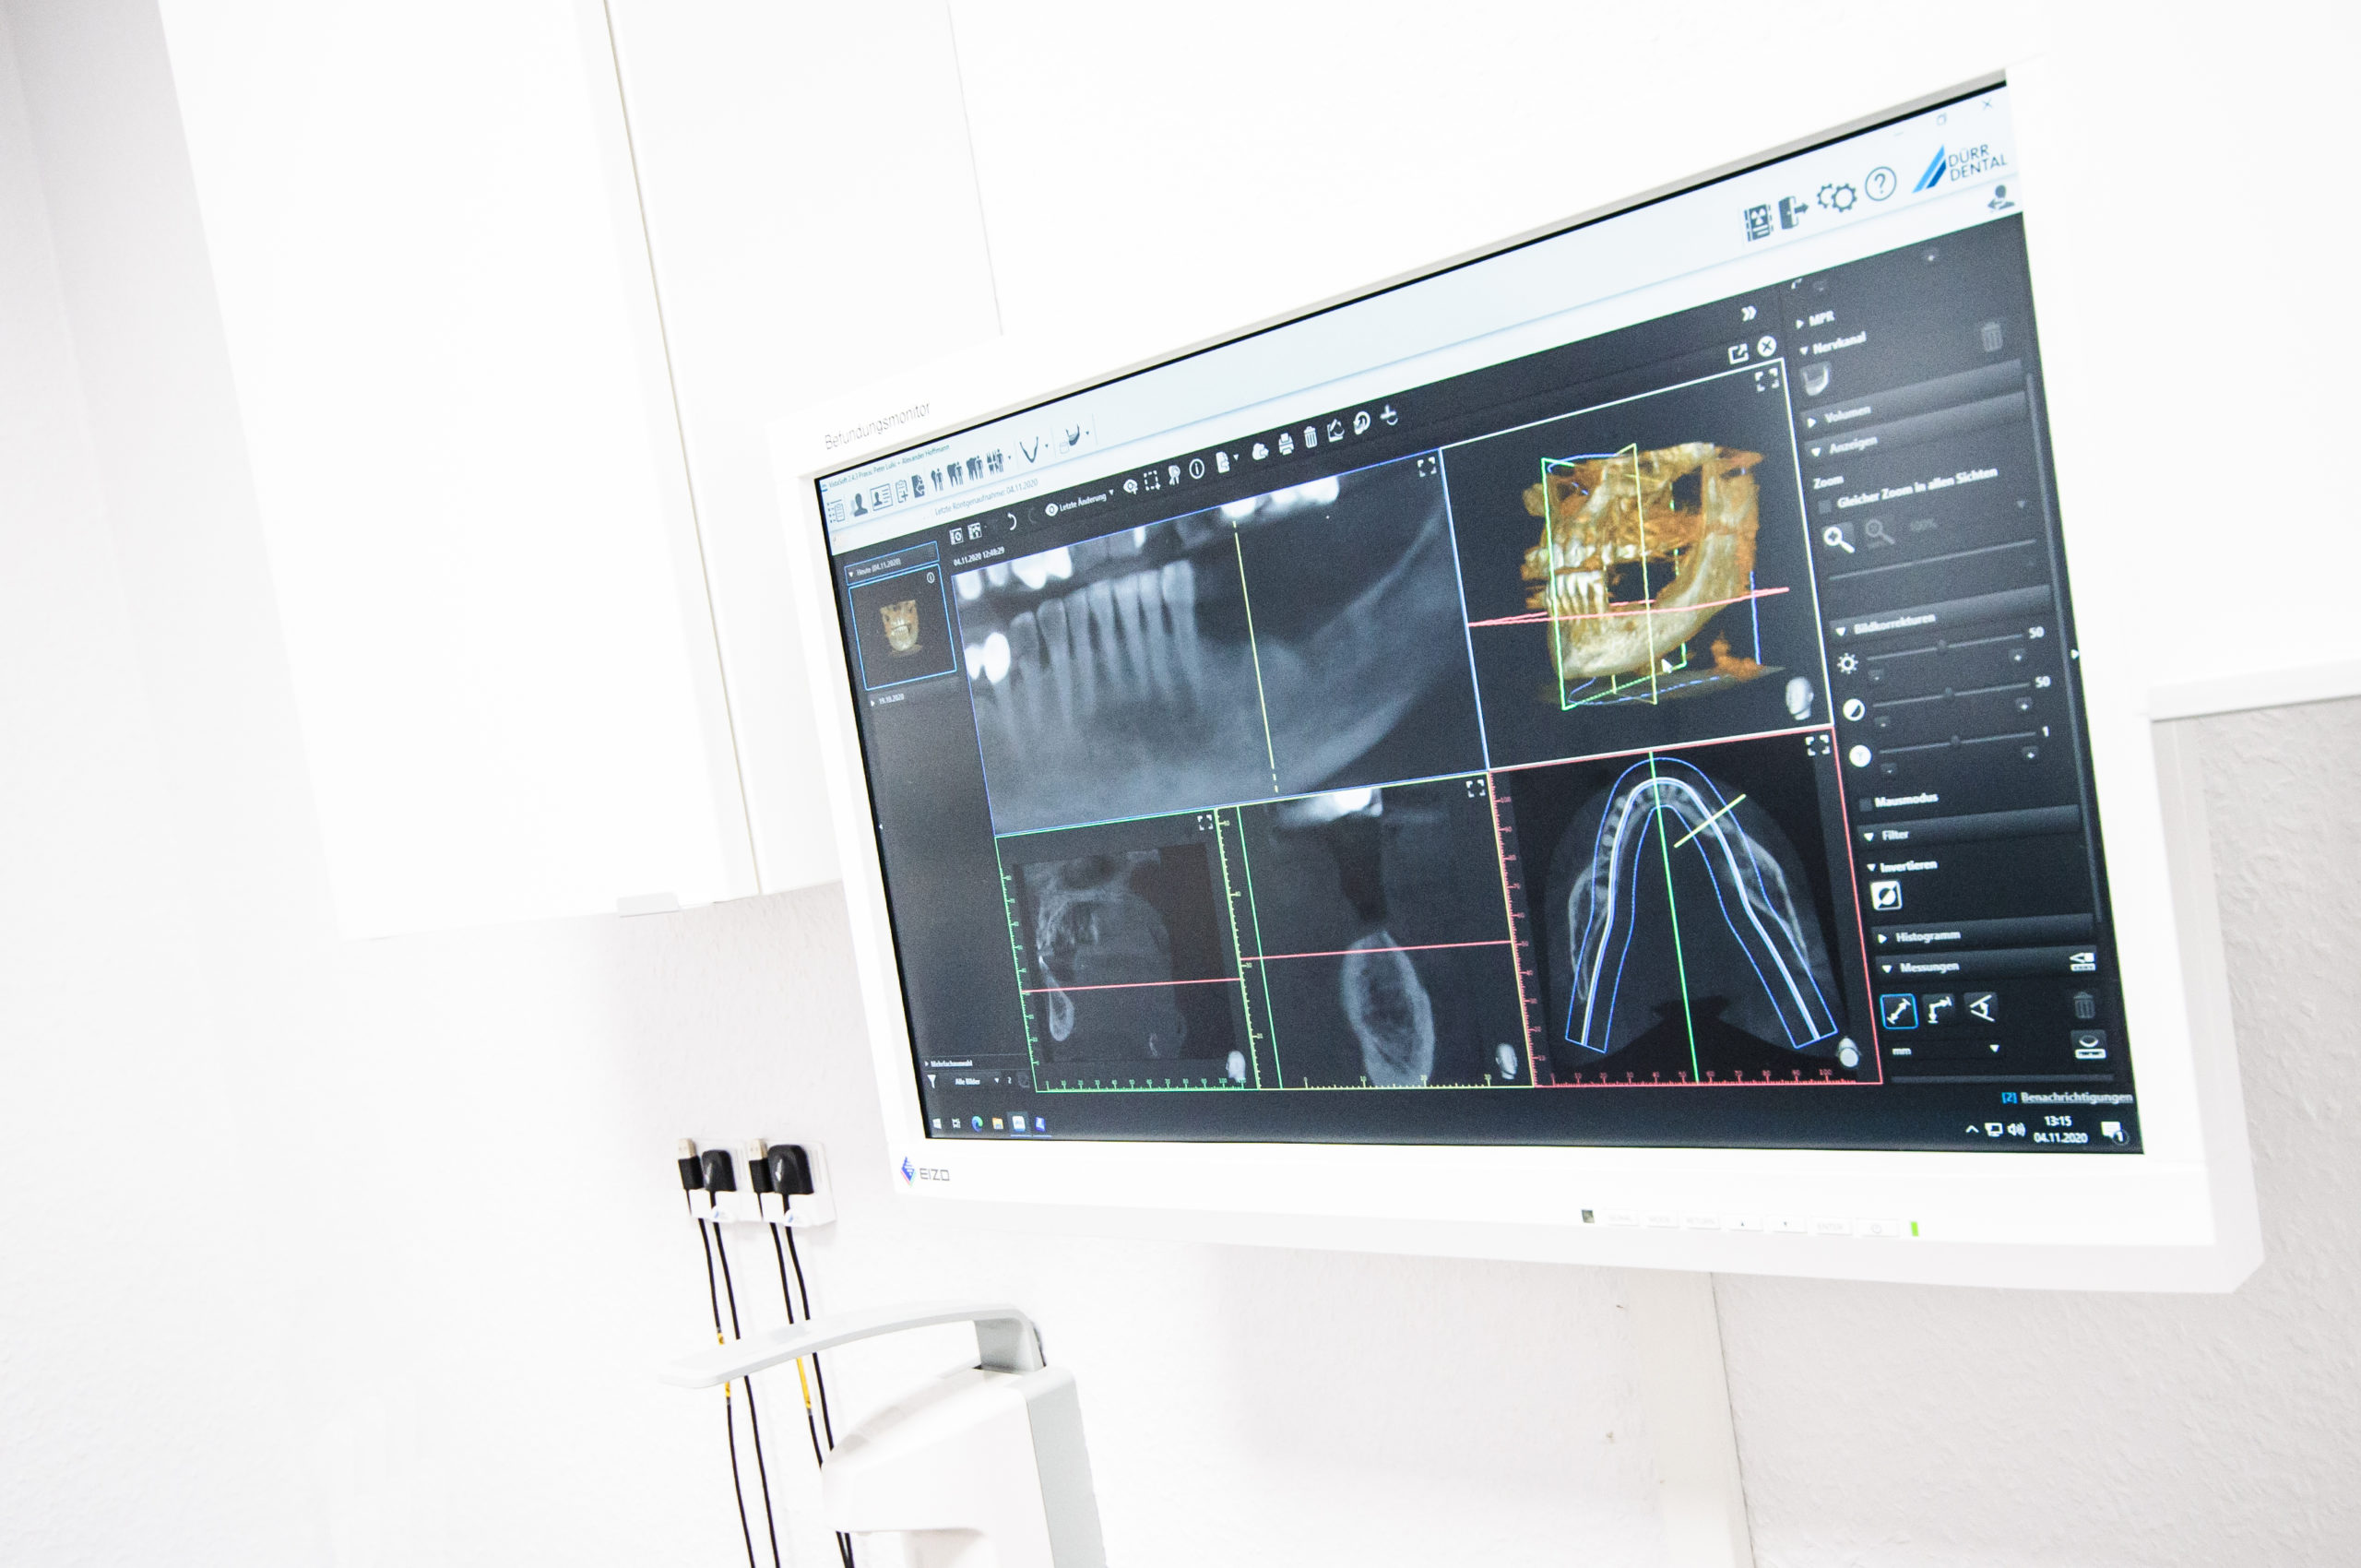 Röntgendiagnostik in 3D